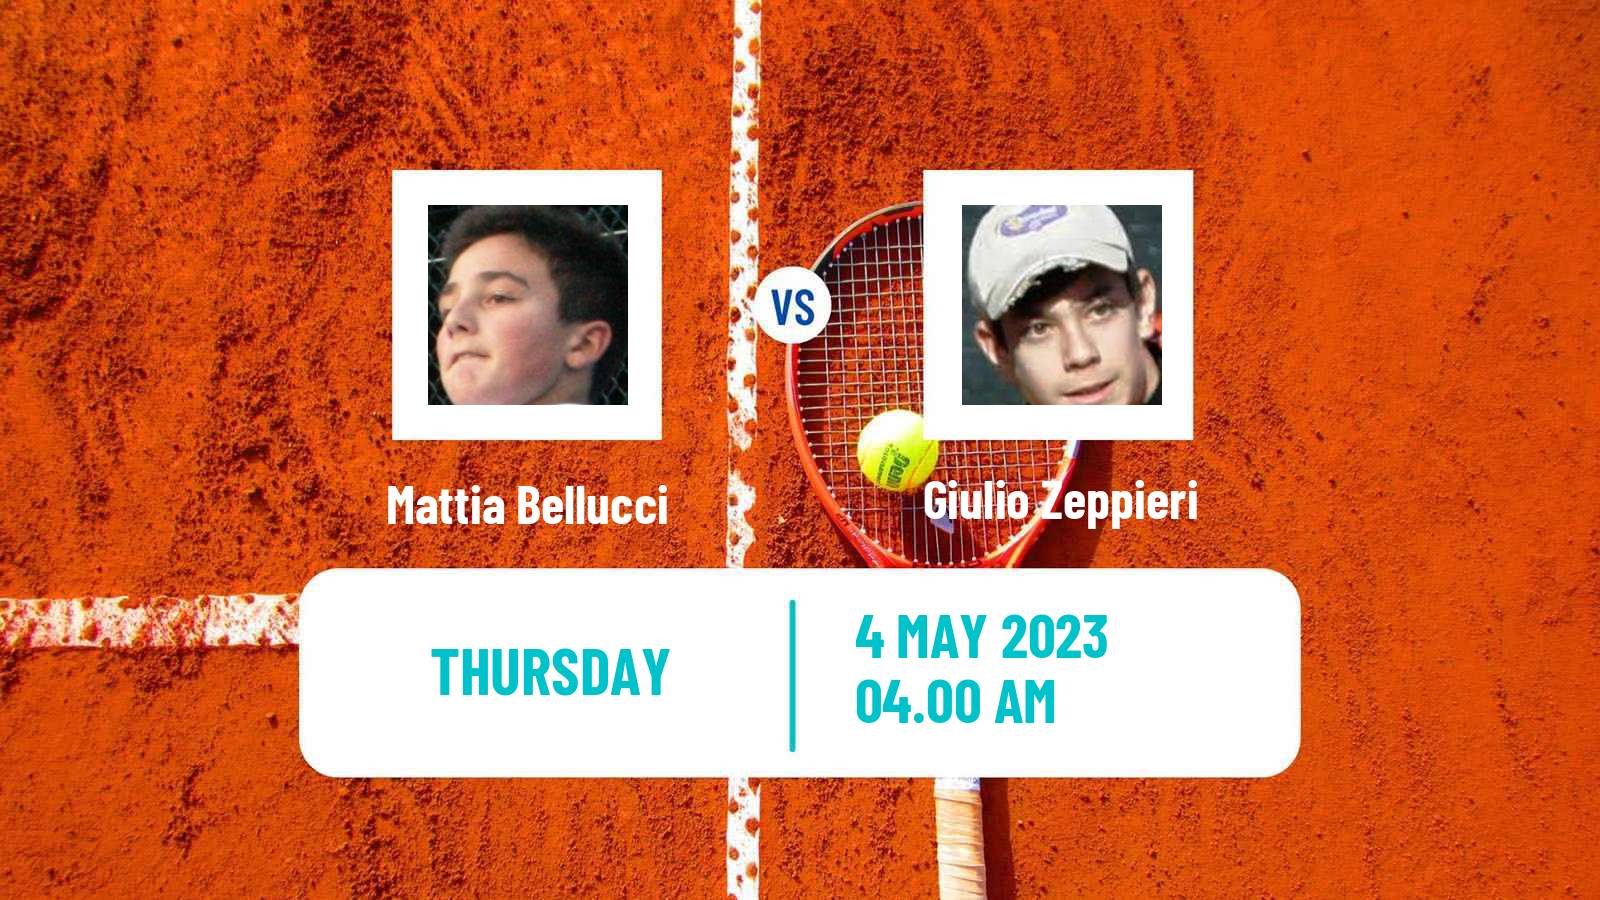 Tennis ATP Challenger Mattia Bellucci - Giulio Zeppieri